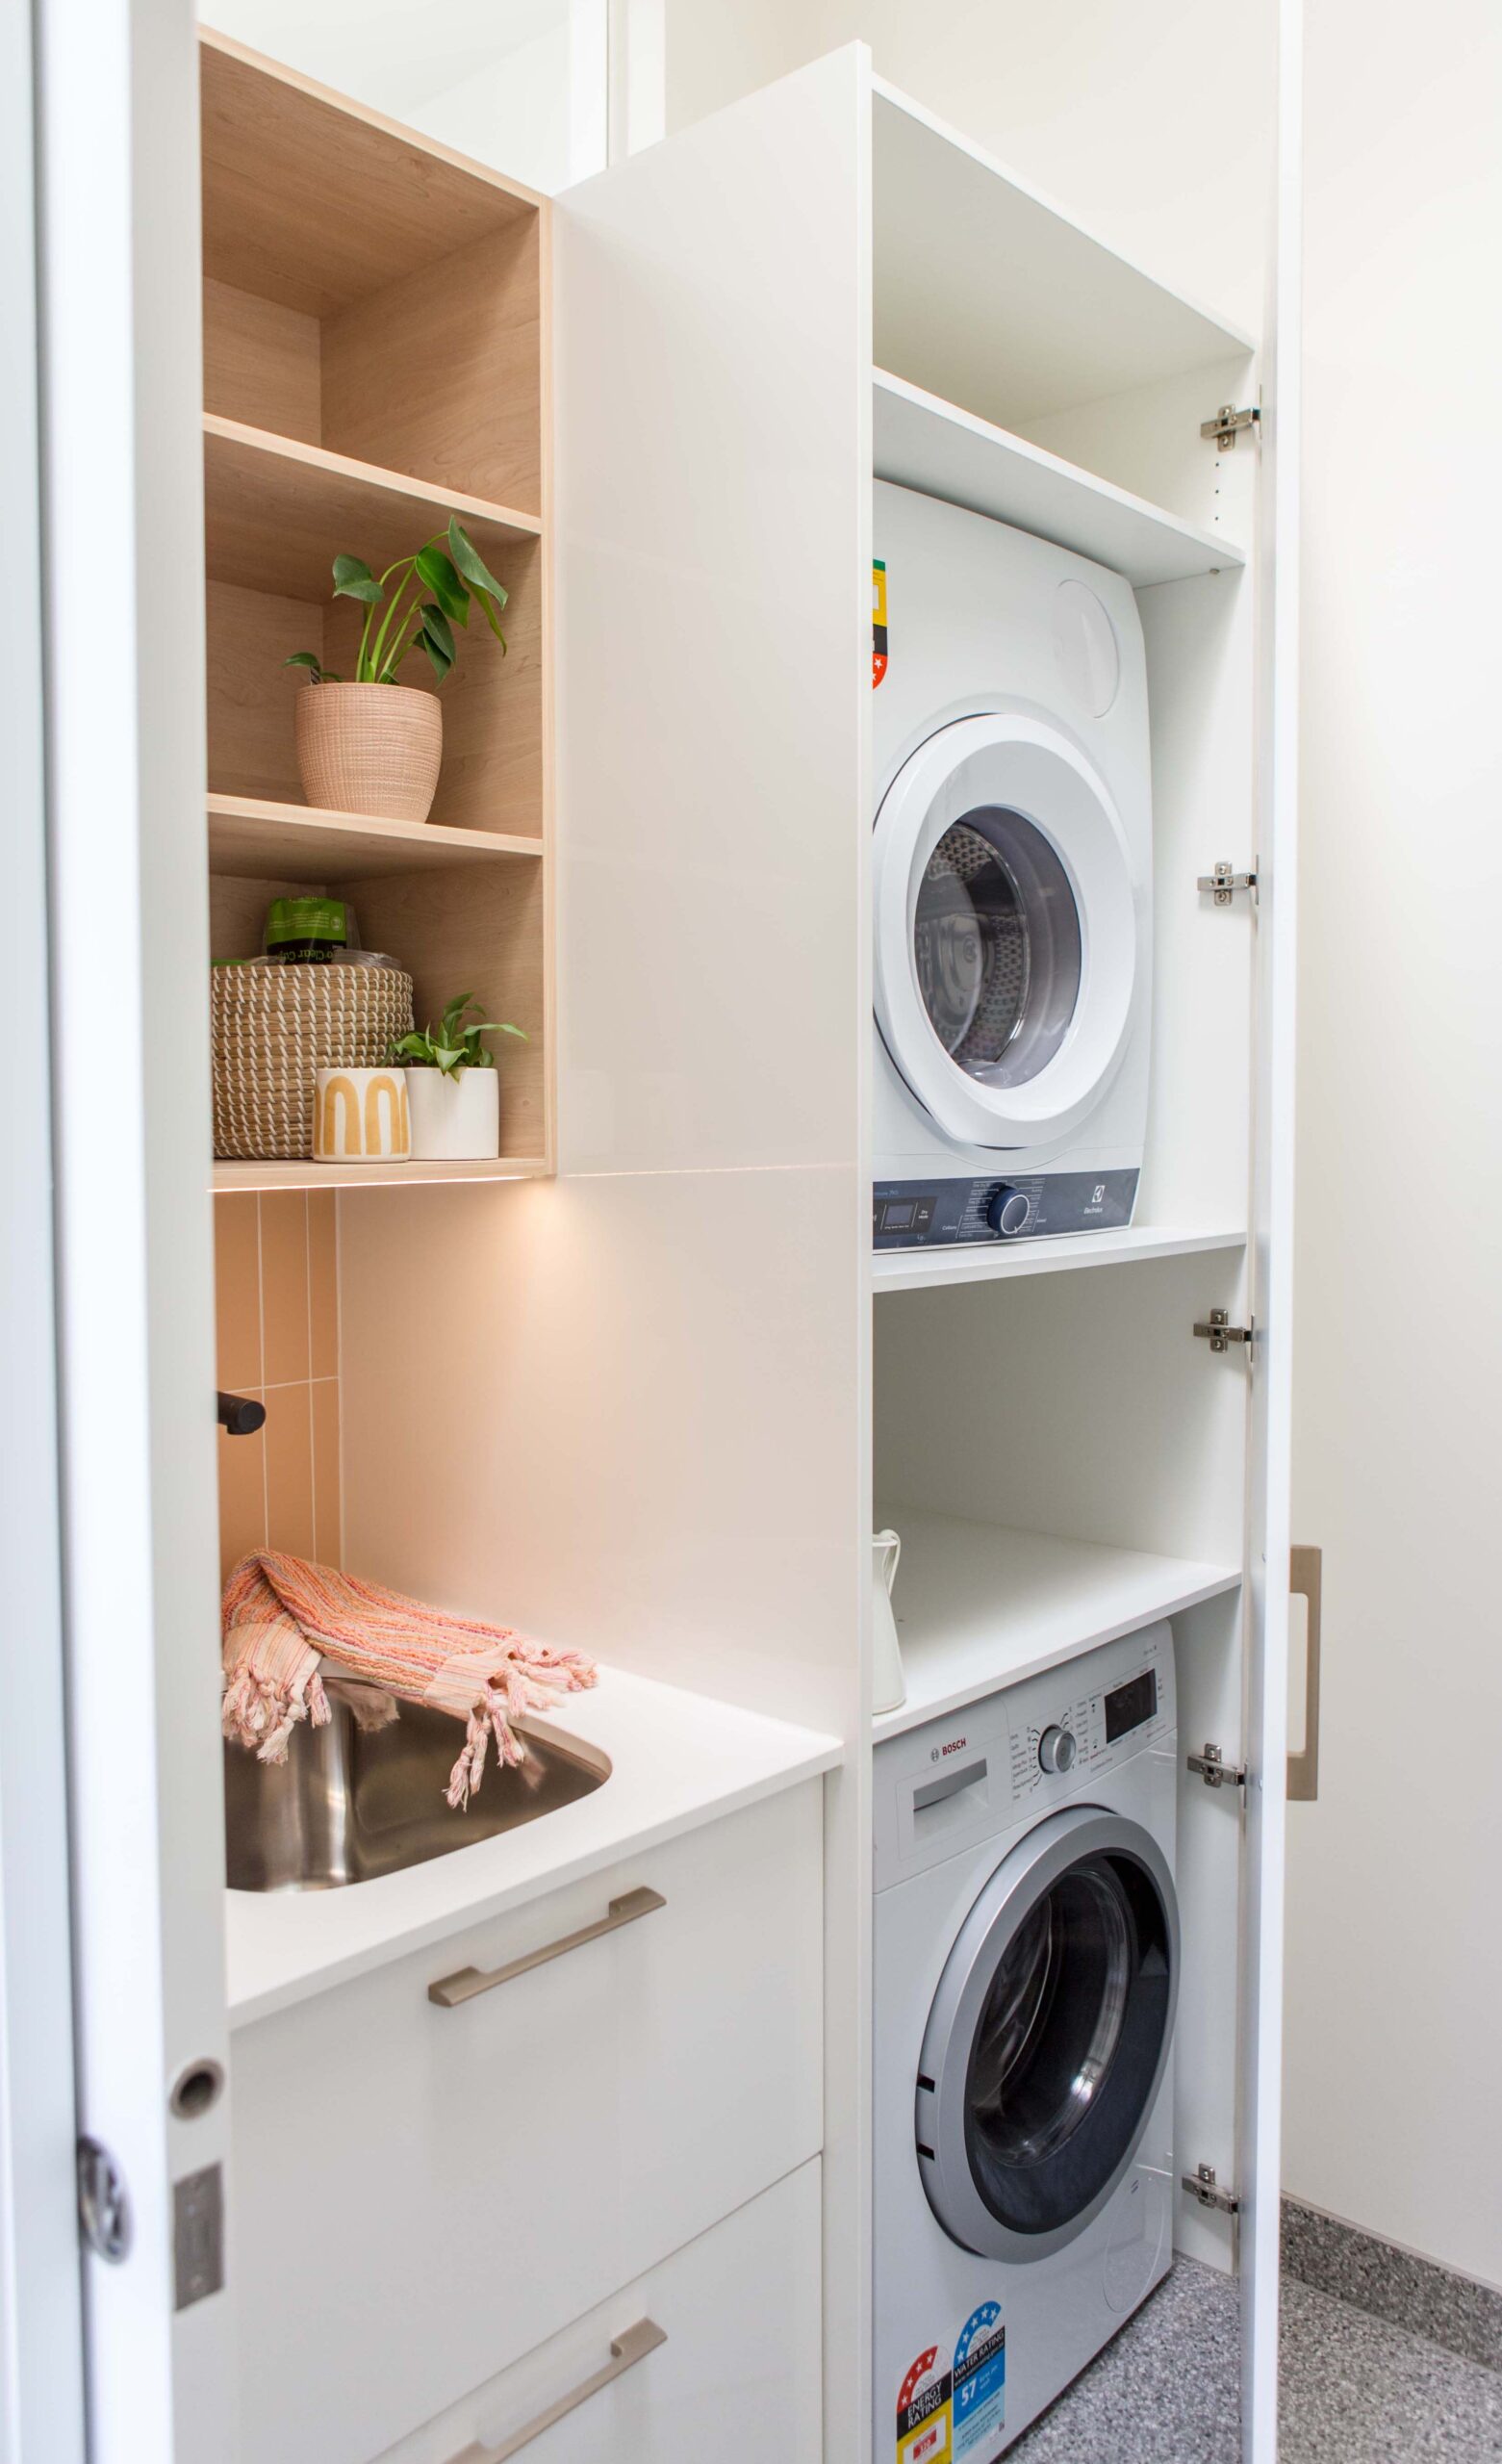 Laundry renovation ideas - storage space